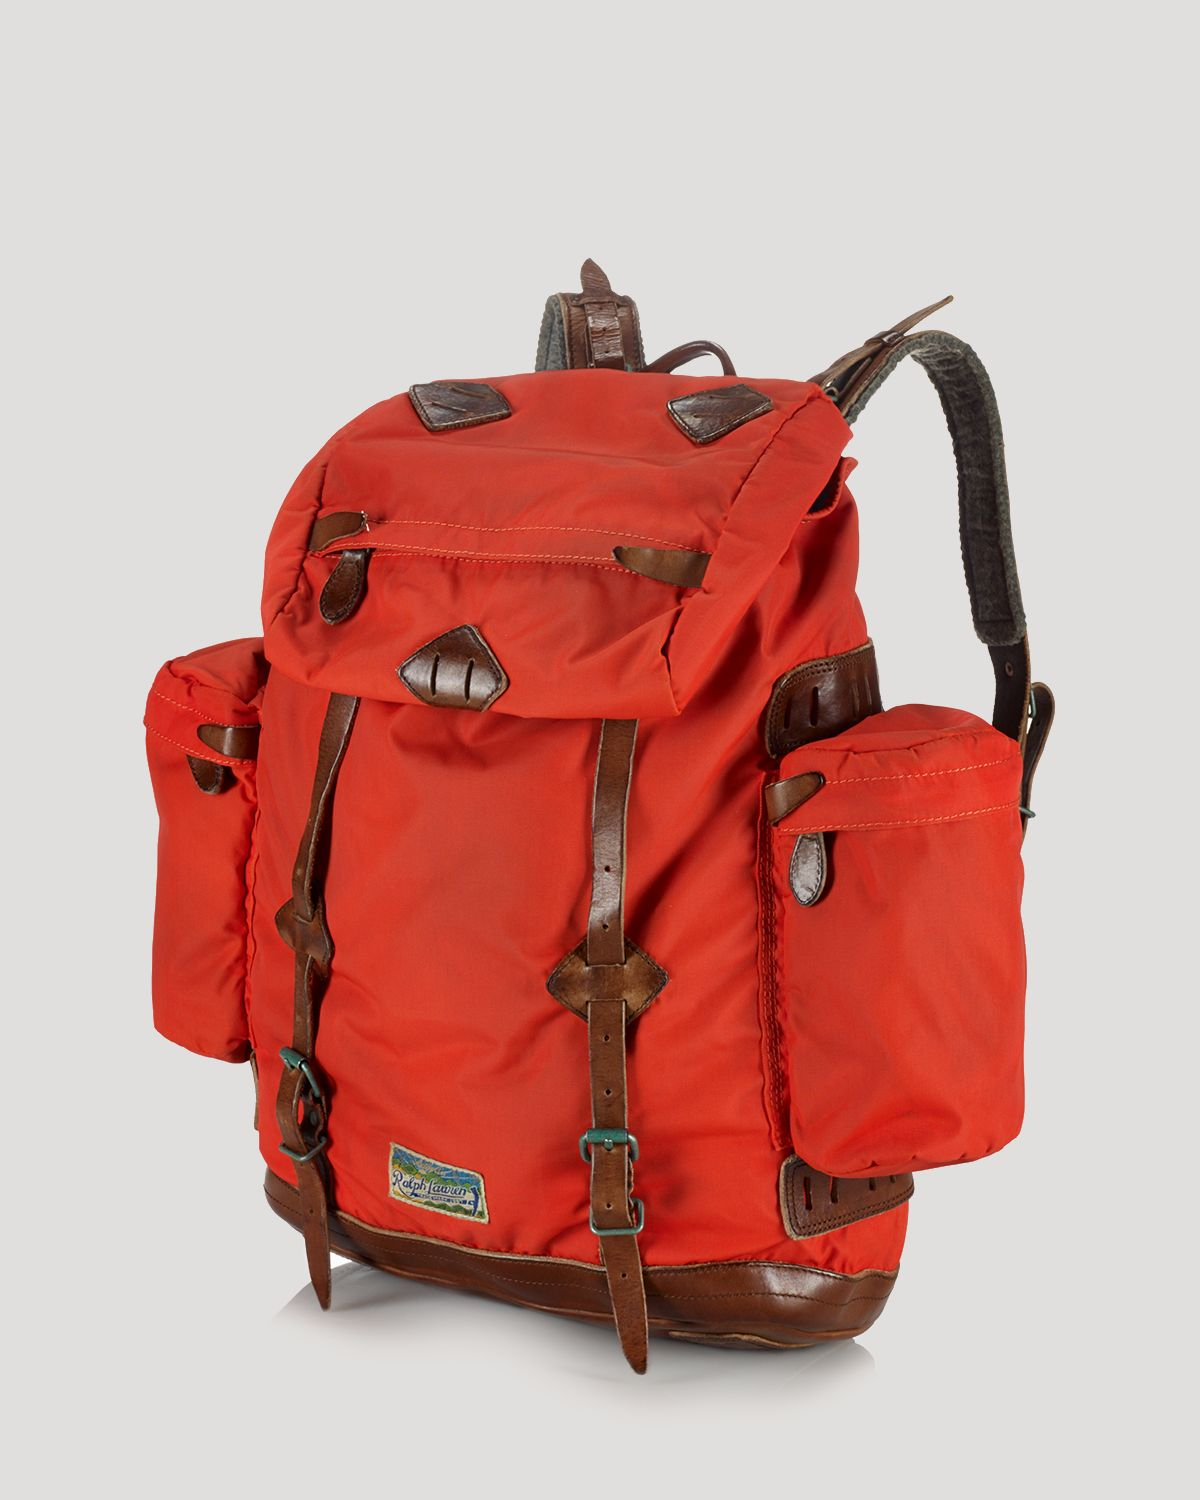 Ralph Lauren Polo Canvas Yosemite Backpack in Orange for Men - Lyst